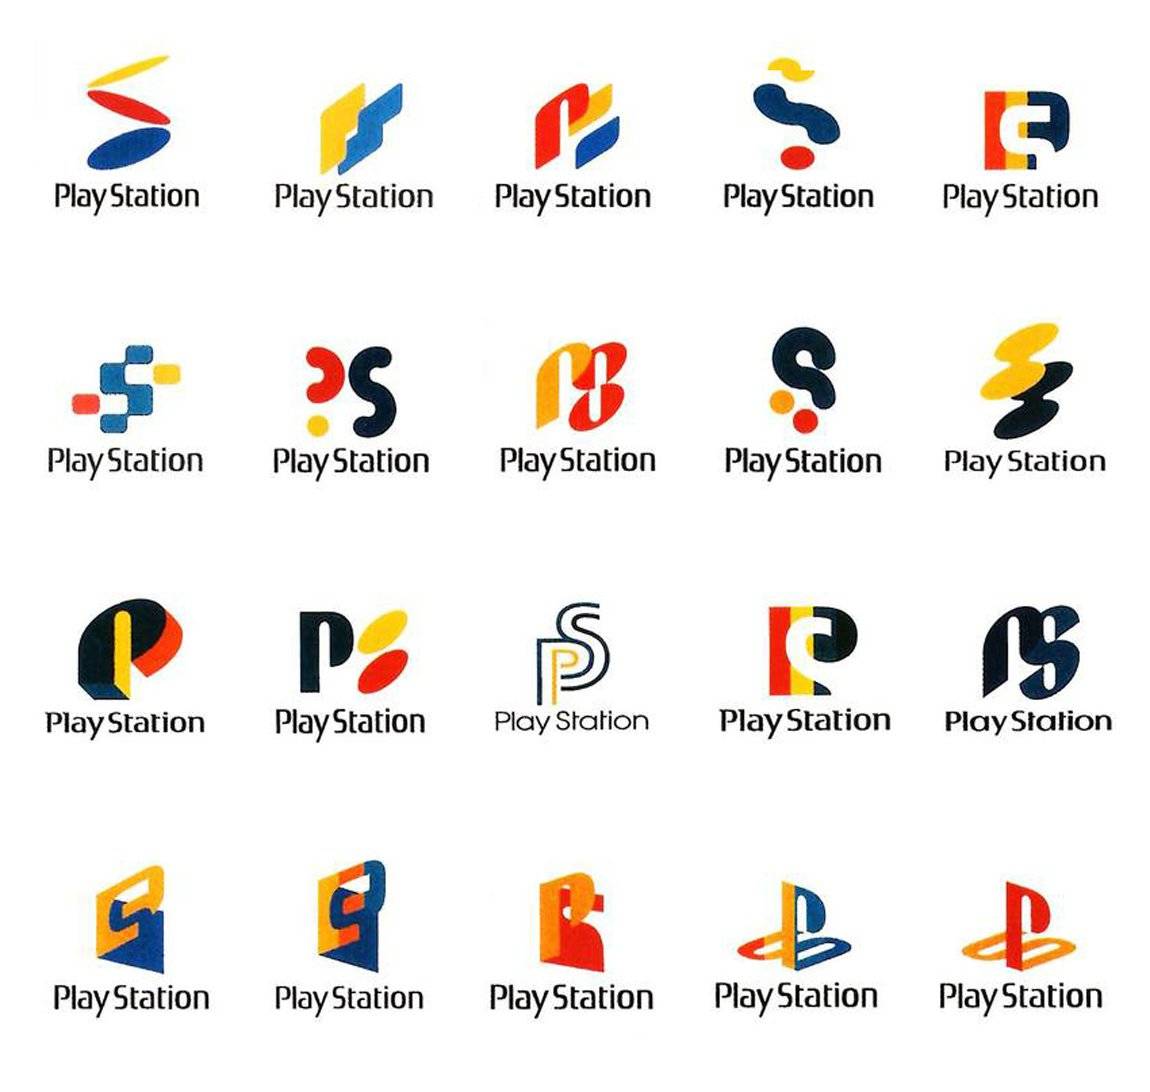 PlayStation 1 Logo - Sony Playstation 1 Logo Design Ideas and Concepts | The Logo Smith